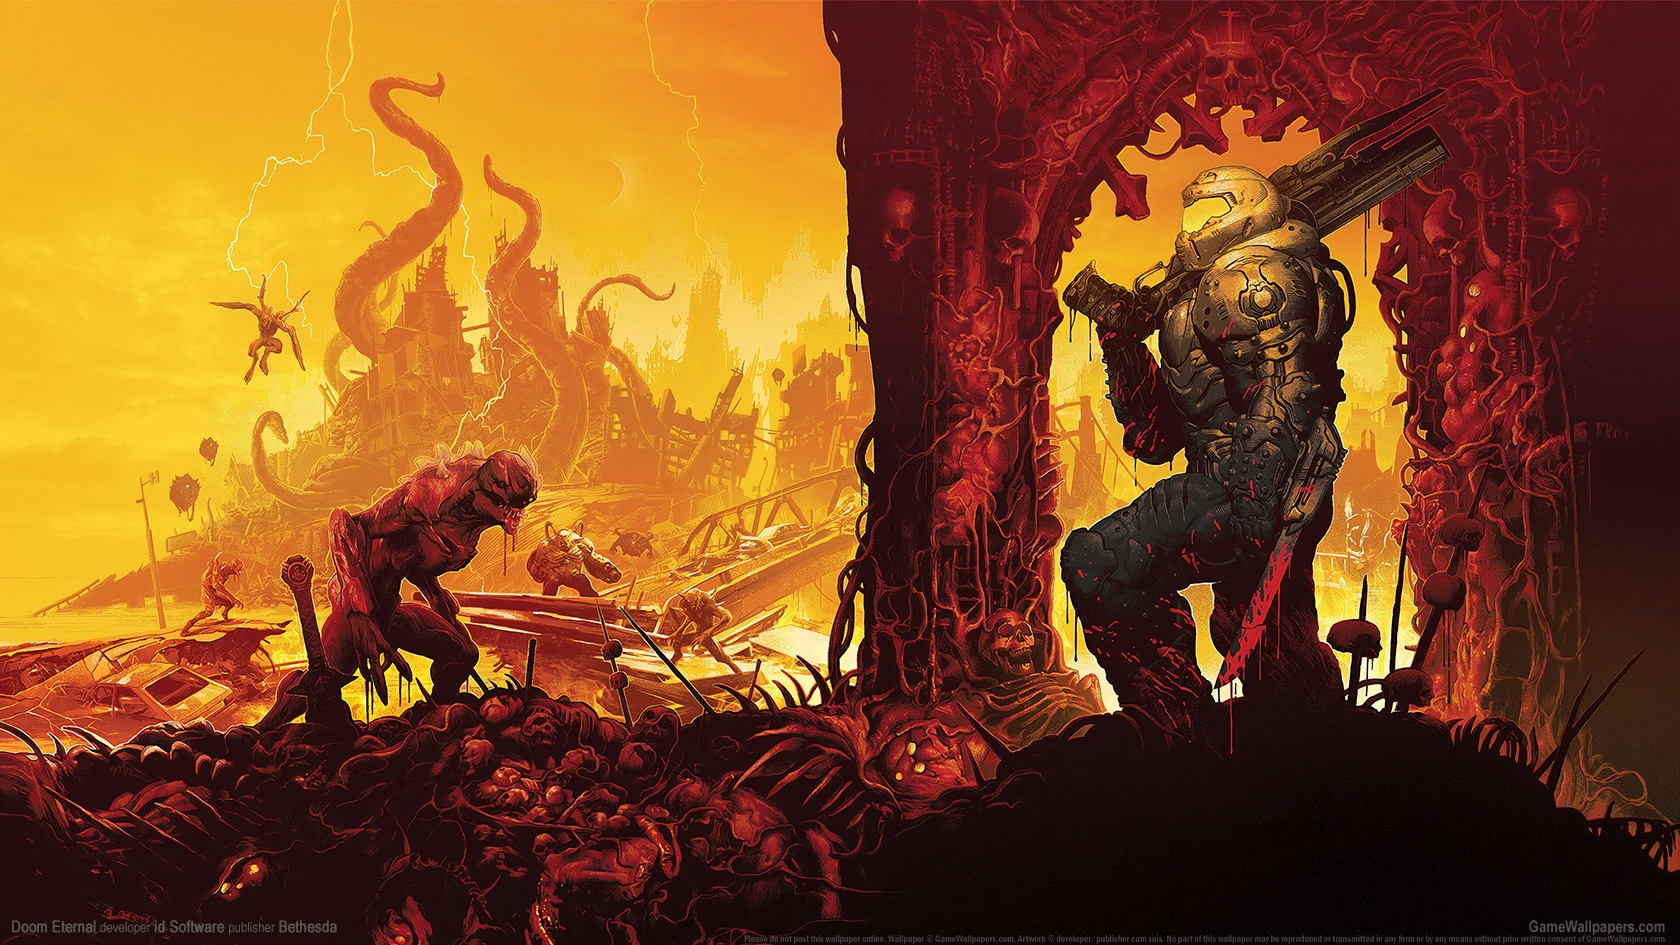 Doom Eternal 1680x945 wallpaper or background 11